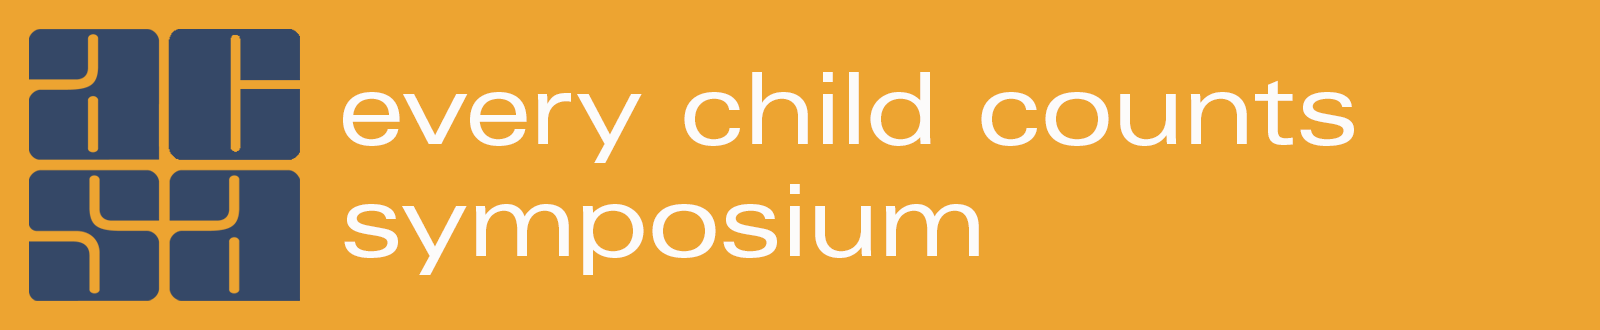 ACSA's Every Child Counts Symposium.